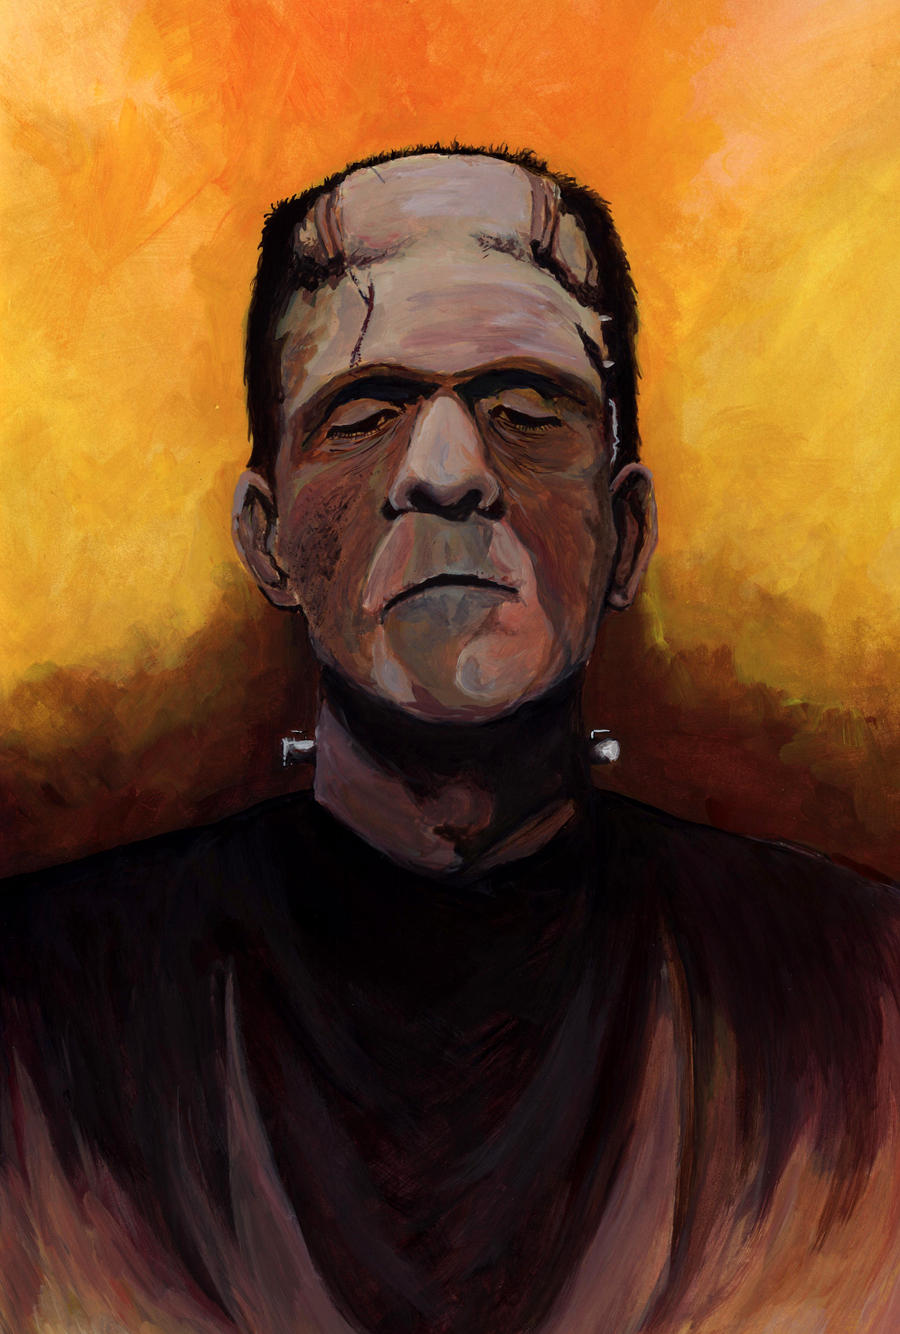 Frankenstein's Monster by Vinkerlid on DeviantArt